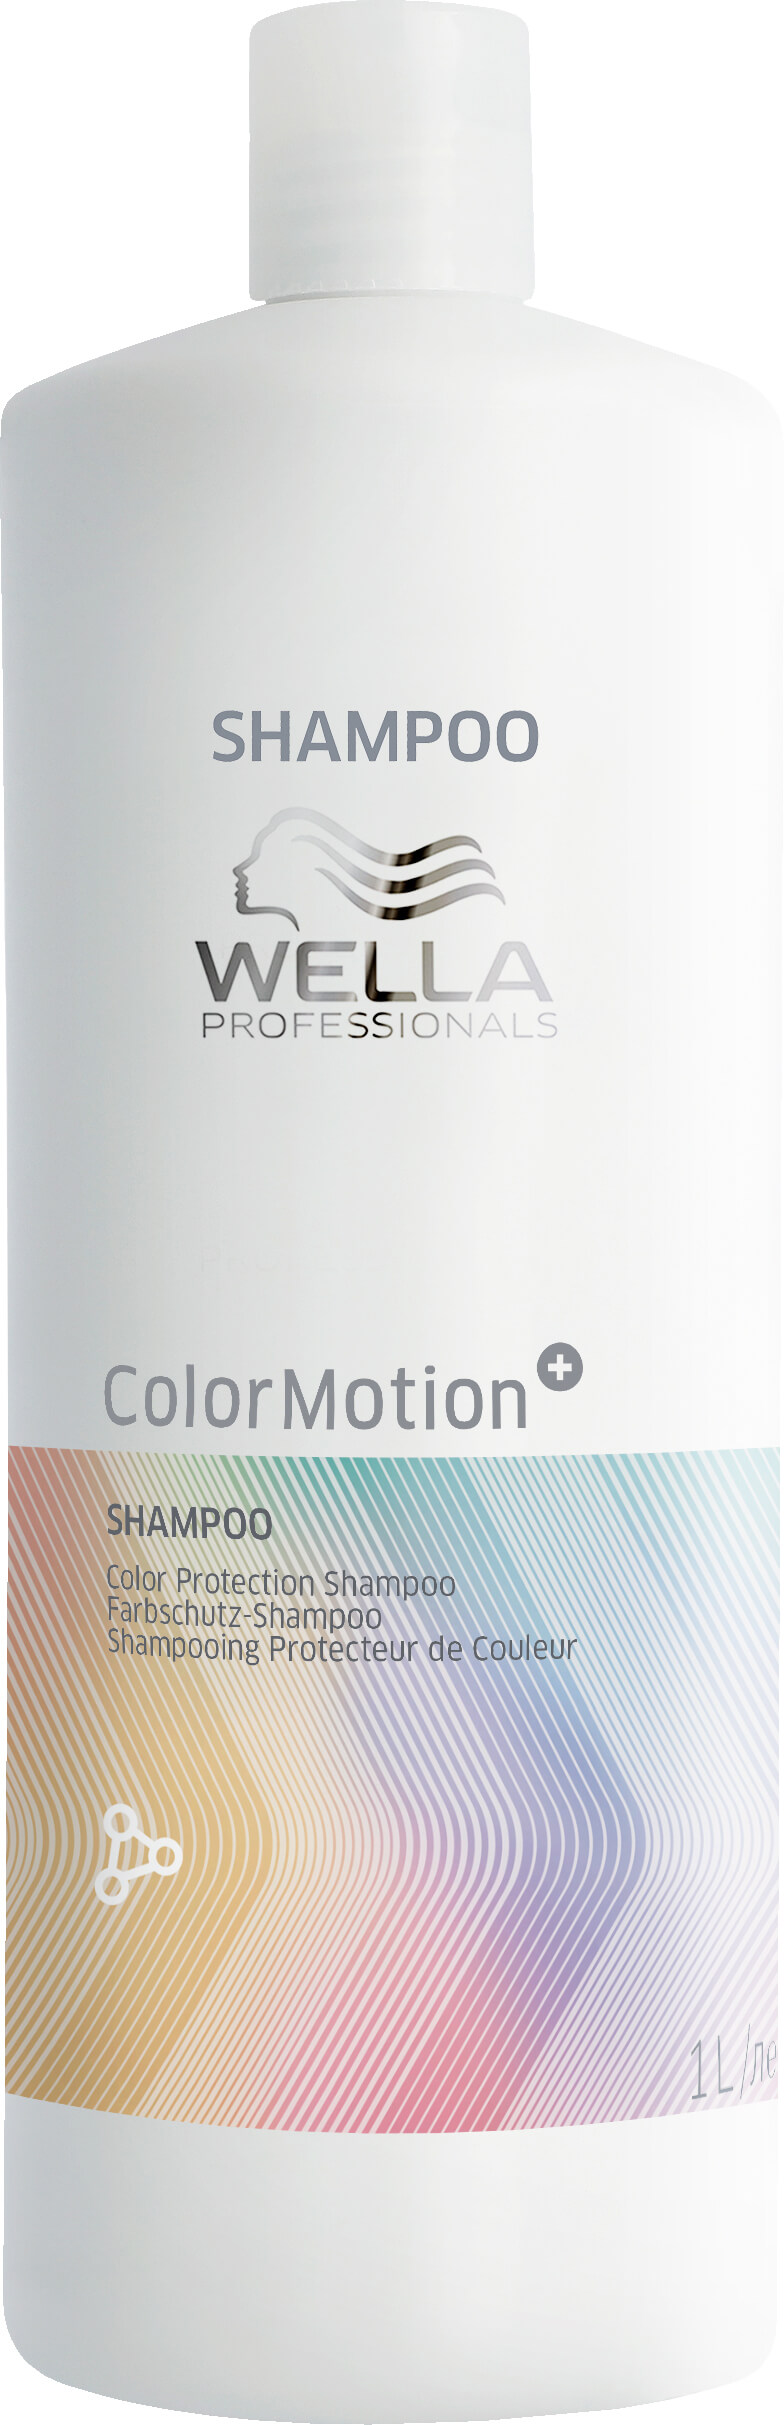 Wella ColorMotion+ Farbschutz-Shampoo 